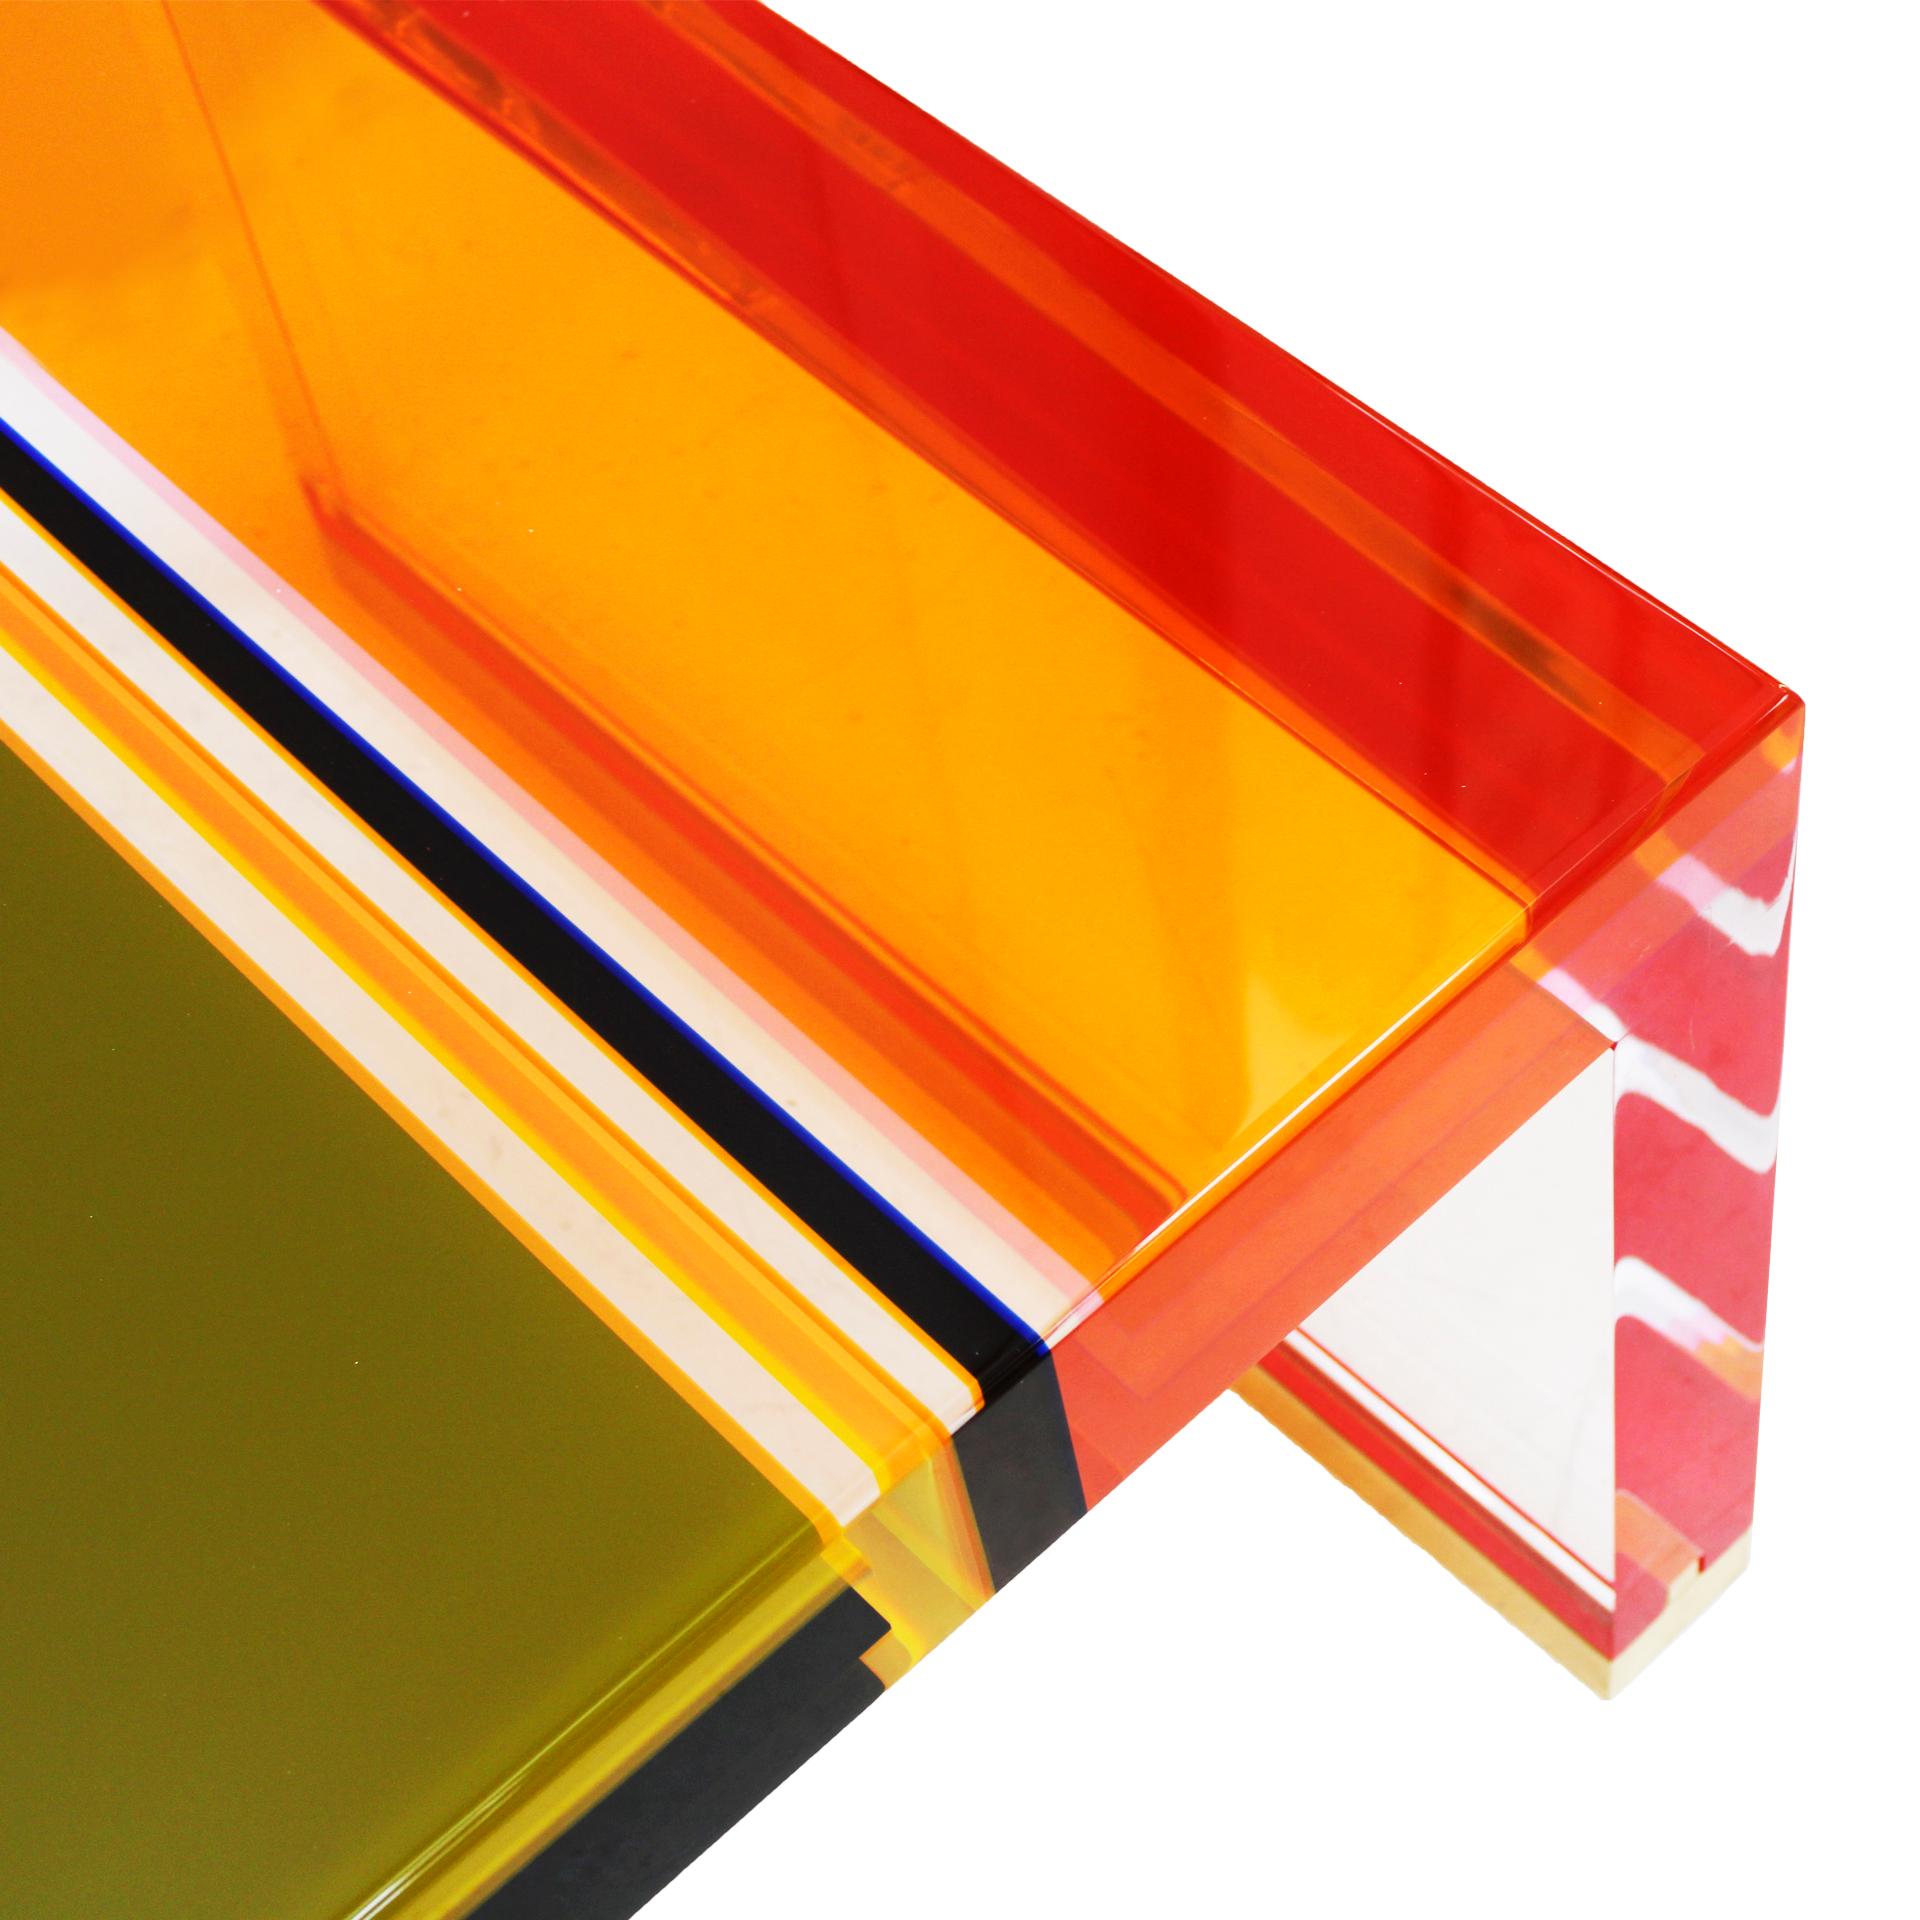 Studio Superego Modern Multicolor Plexiglass and Brass Feet Italian Coffee Table For Sale 2